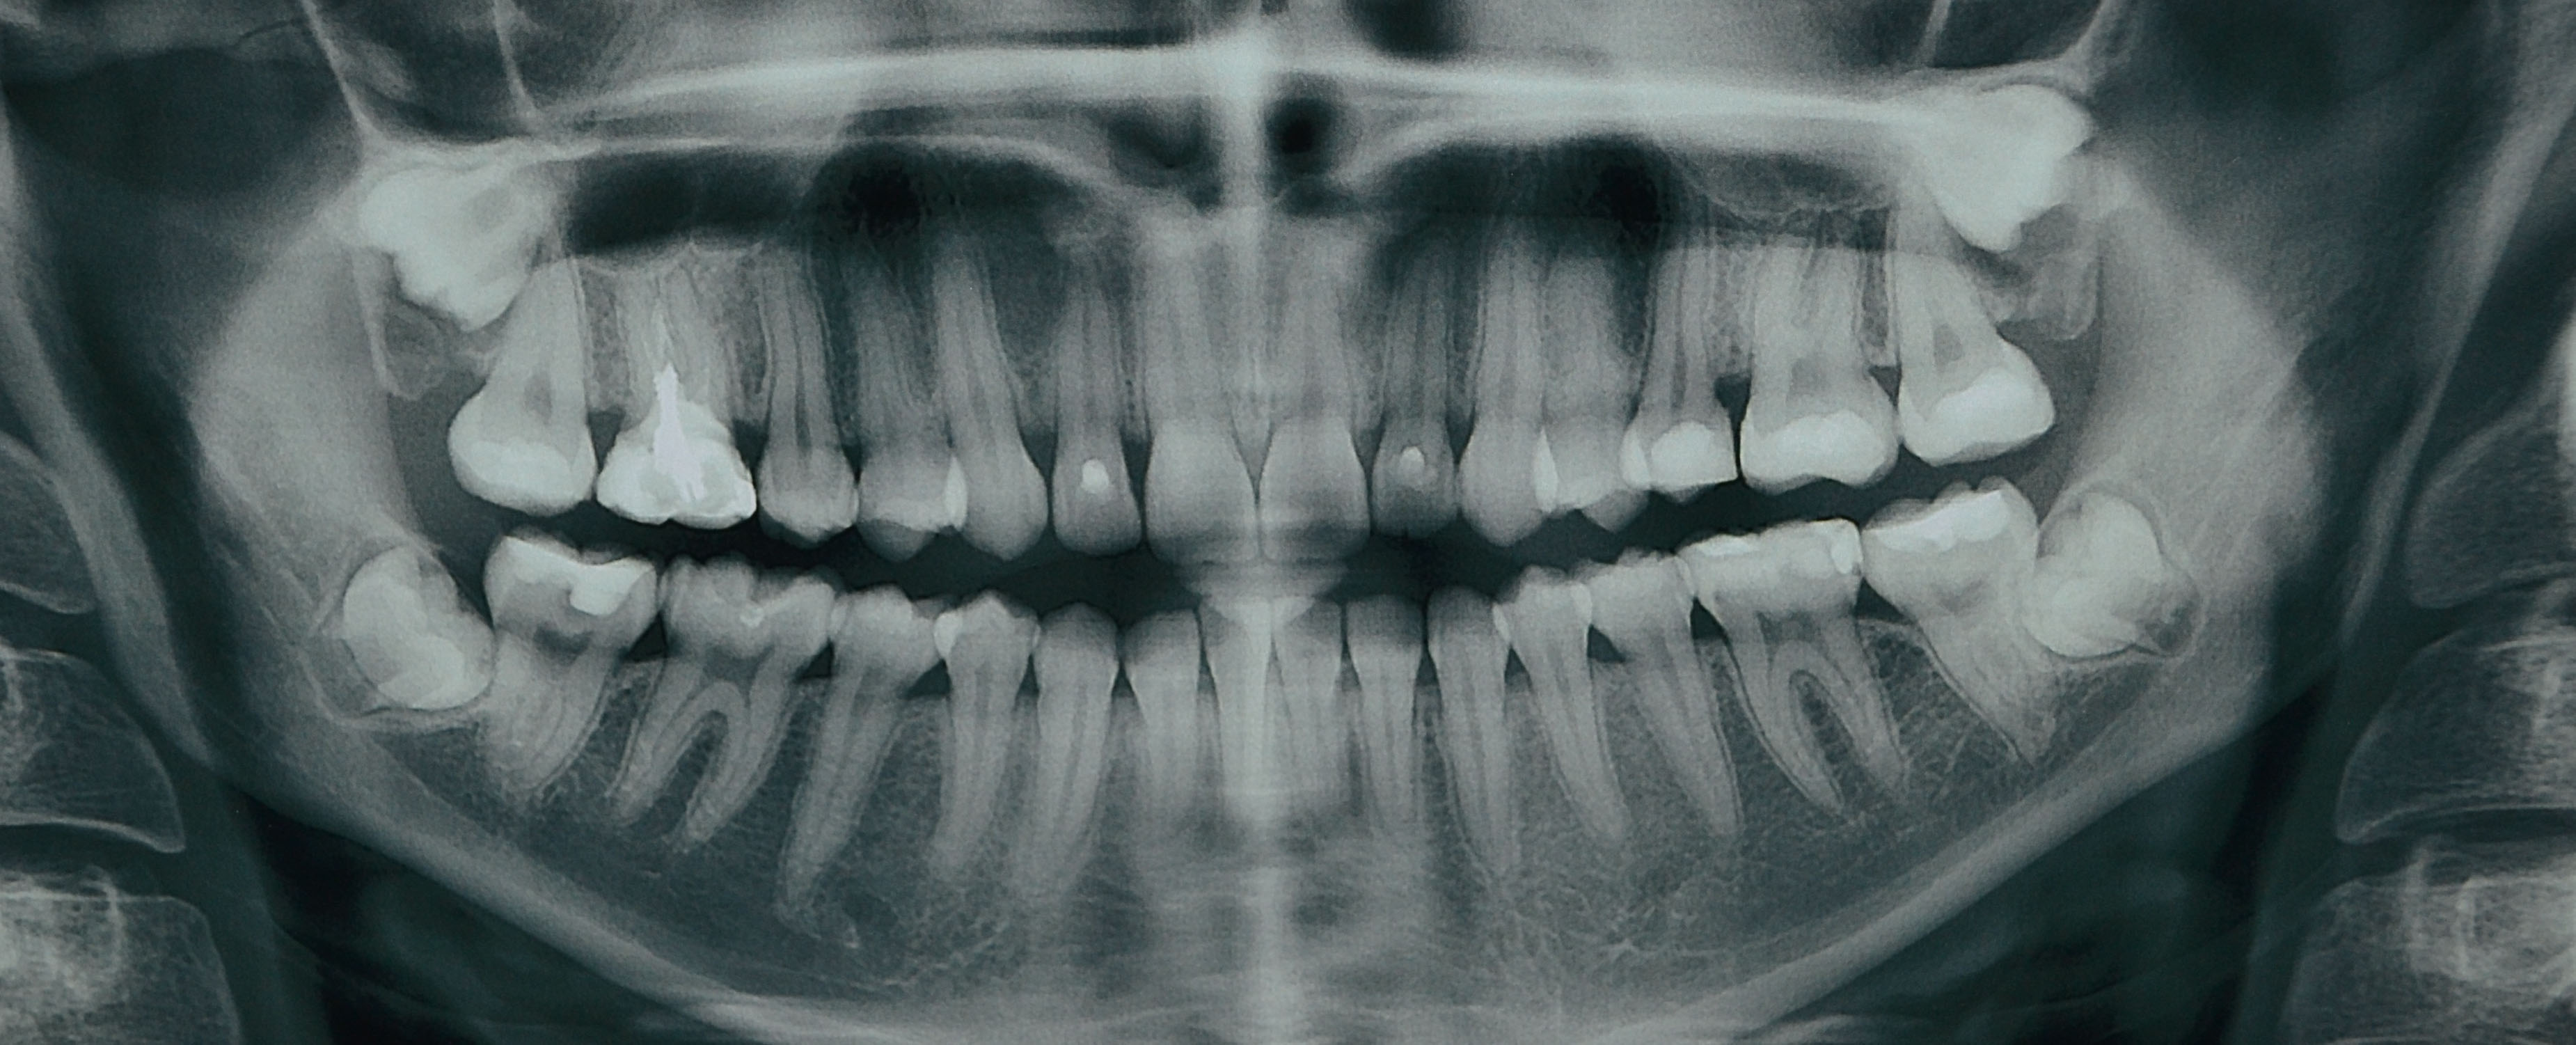 фото восьмерок зубов